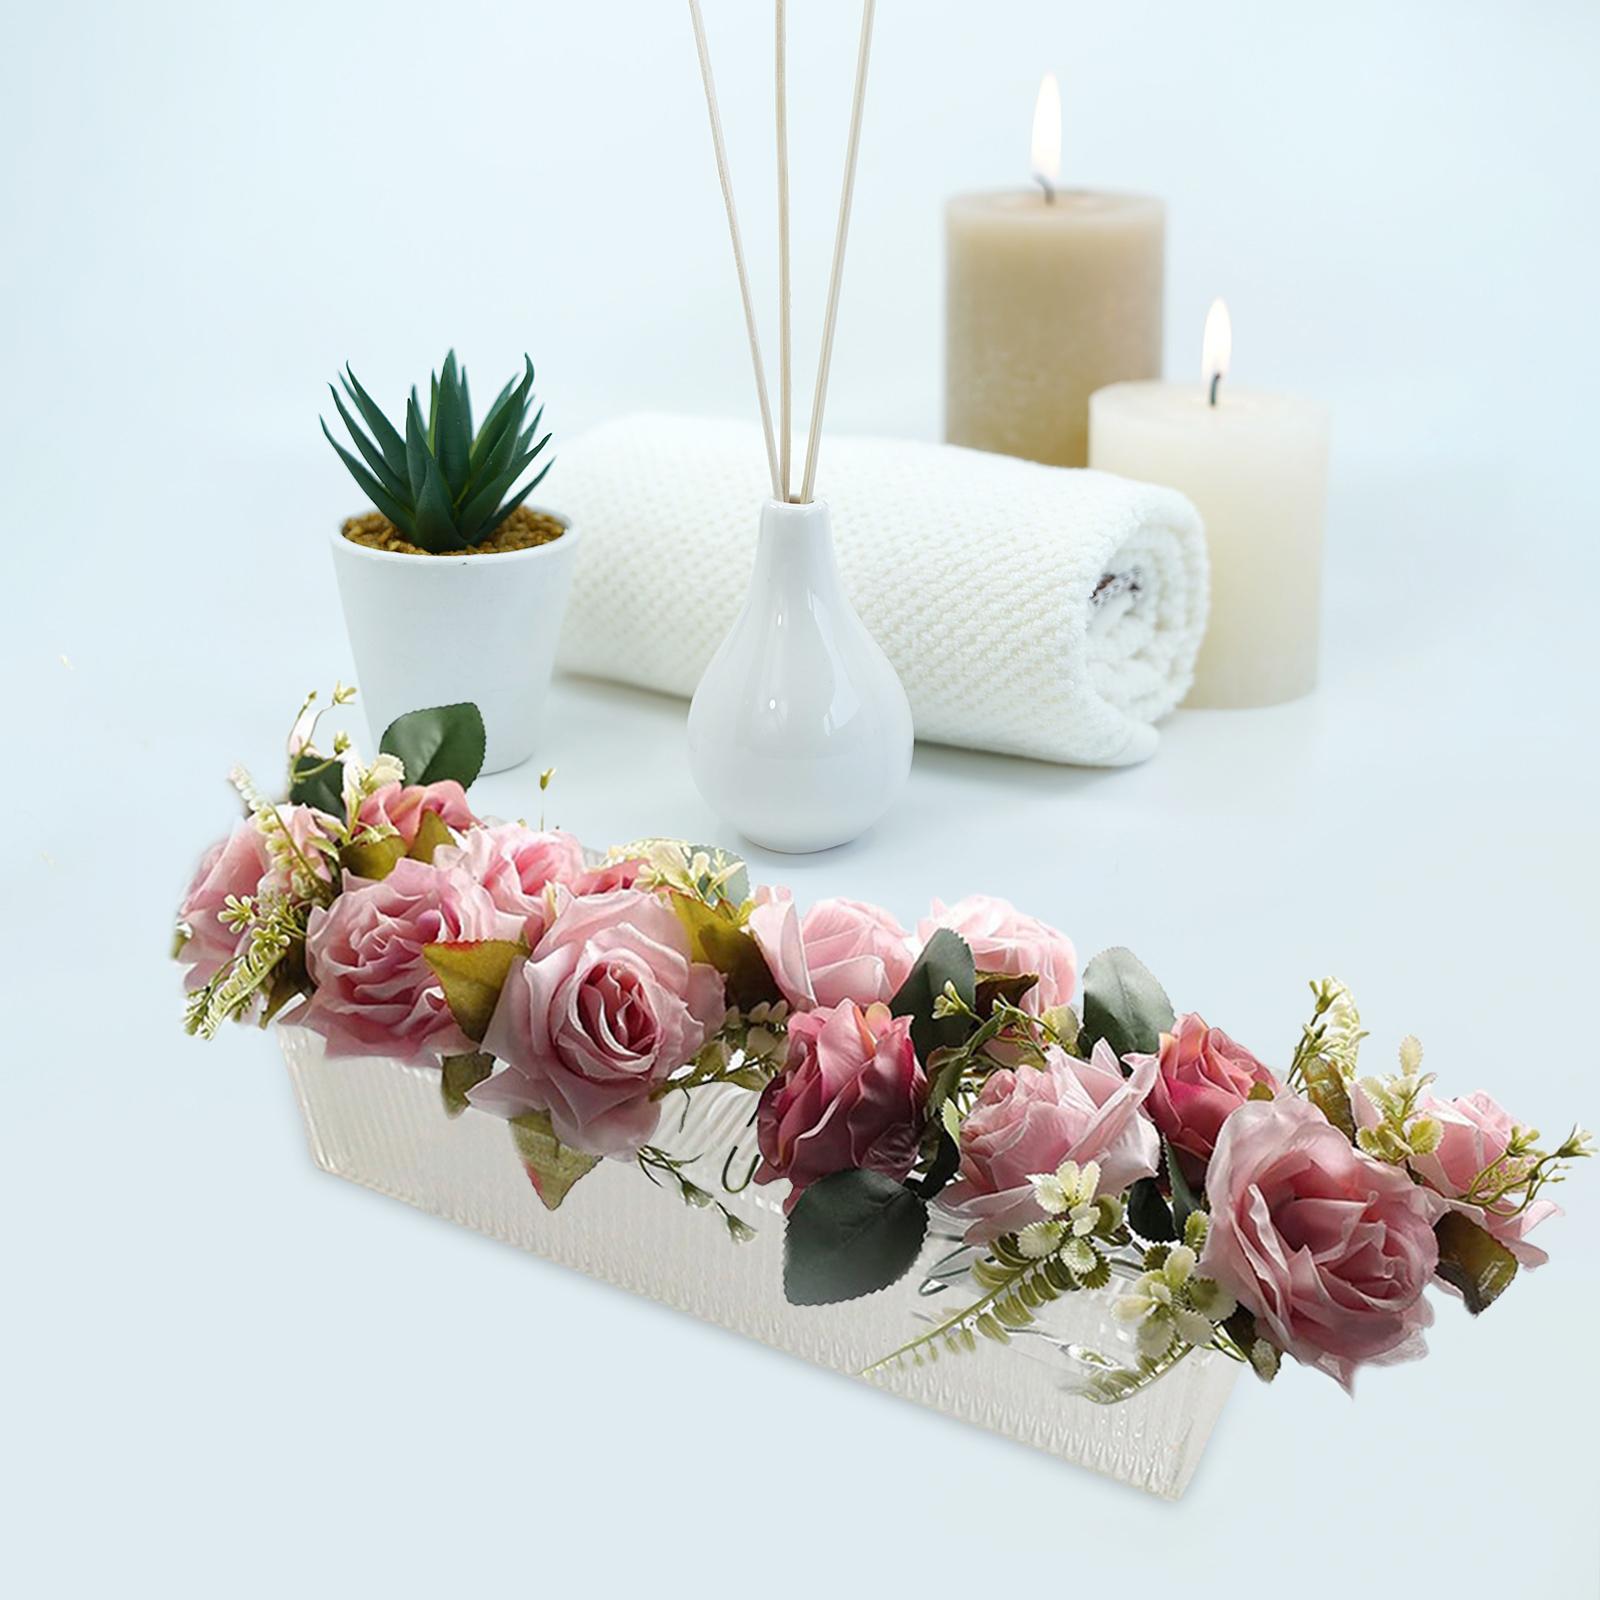 Acrylic Flower Vase Centerpiece Shelf Long Decorations with Vertical Stripes 25x10x6.5cm